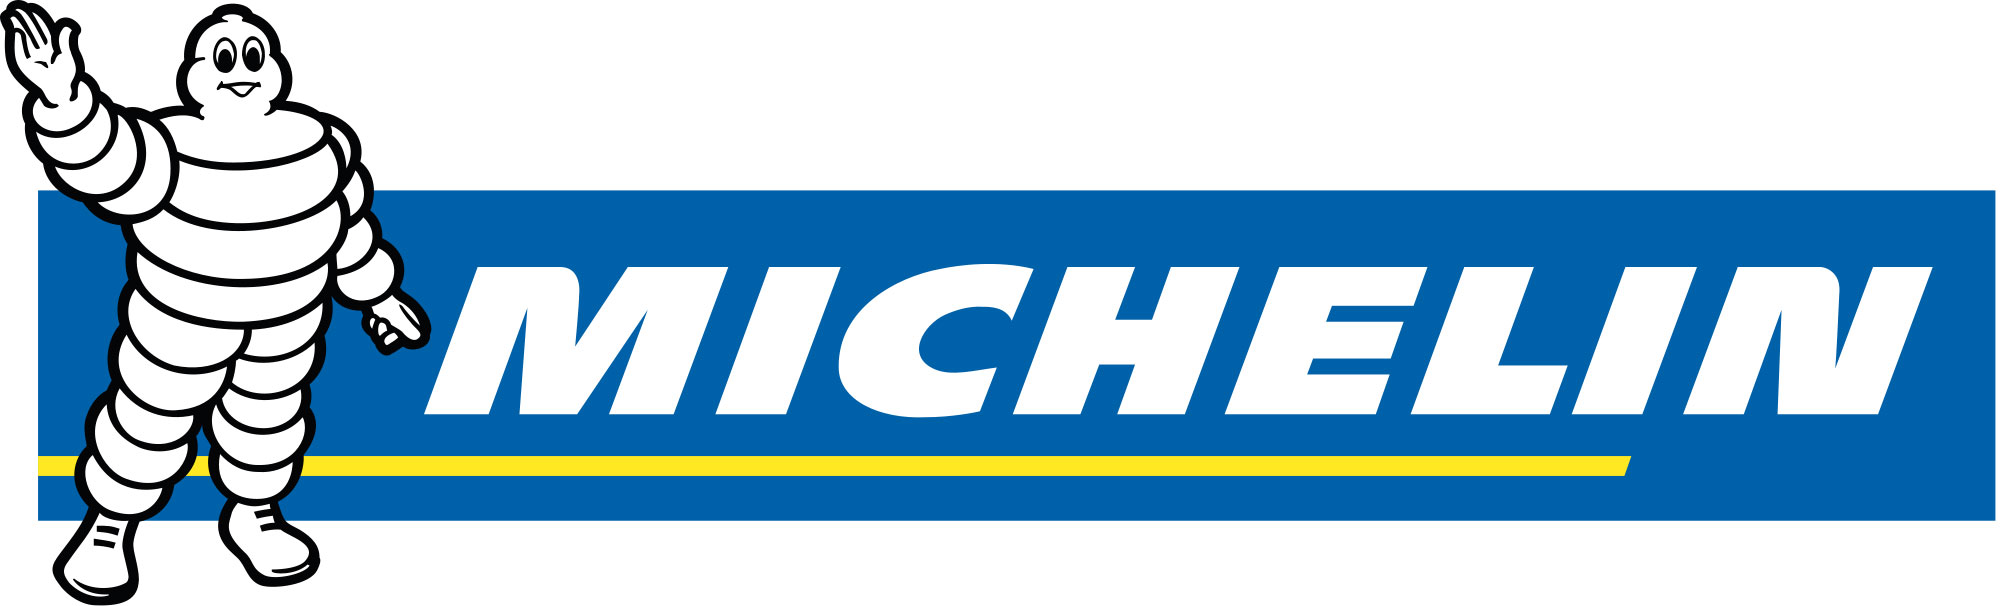 Michelin dck - Kp Michelin dck online